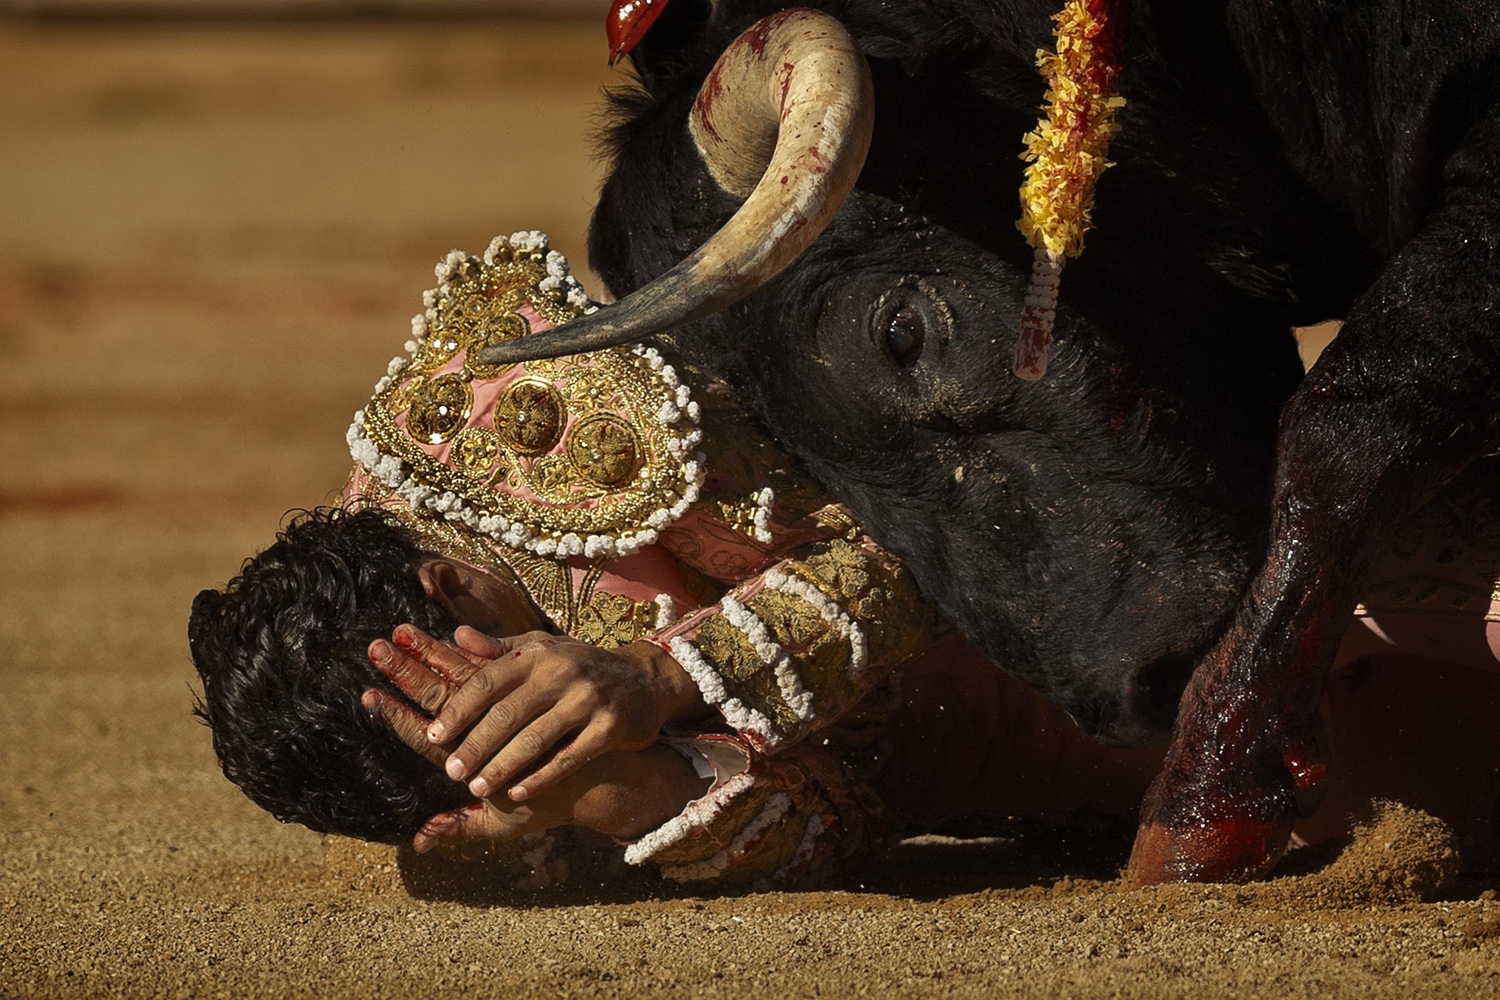 Jul. 9, 2014. Spanish bullfighter Ivan Fandino is gored by a bull during a bullfight of the San Fermin festival, in Pamplona, Spain.